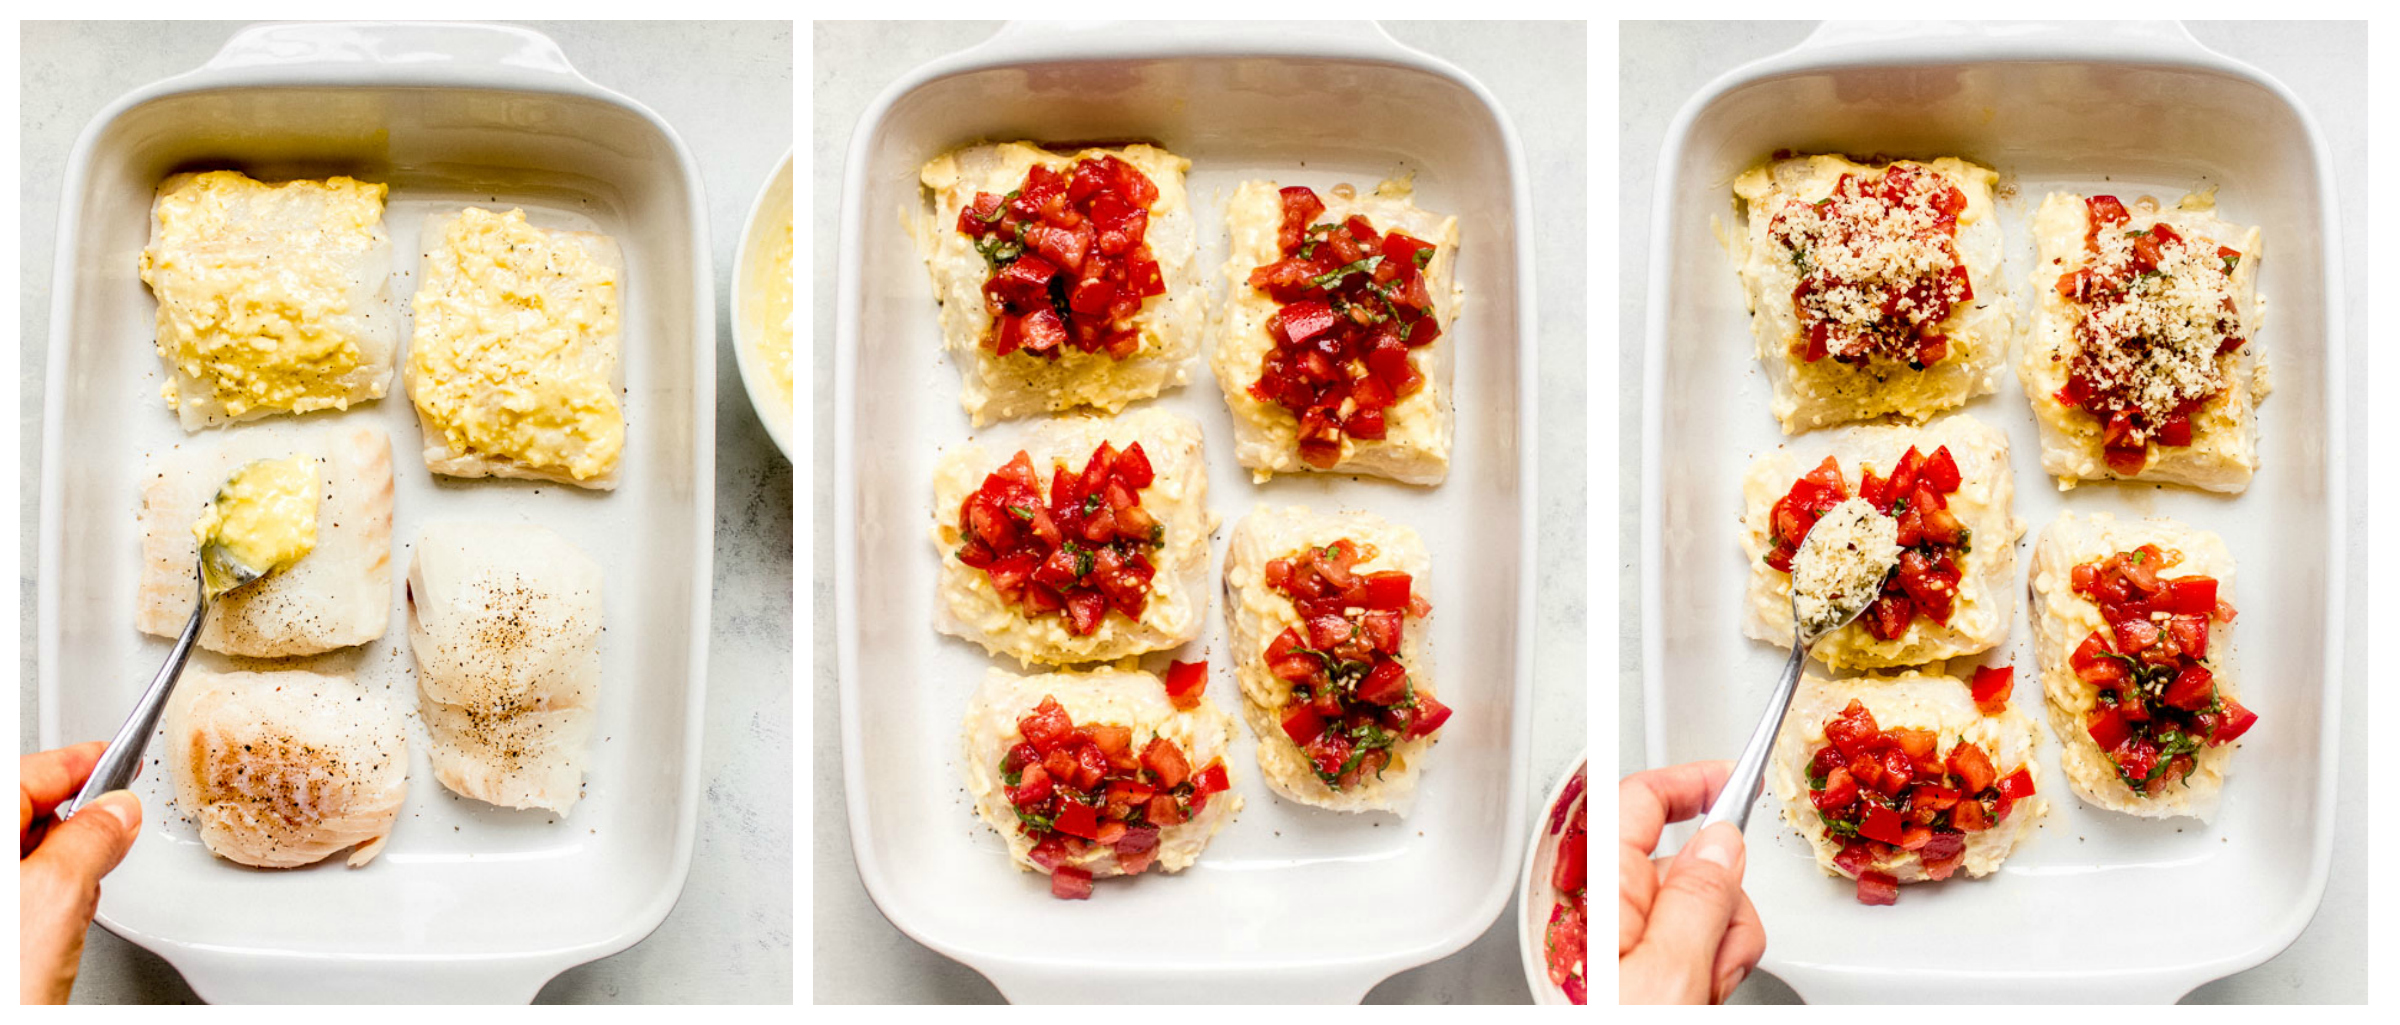 How to prepare bruschetta cod with crispy panko crumbs